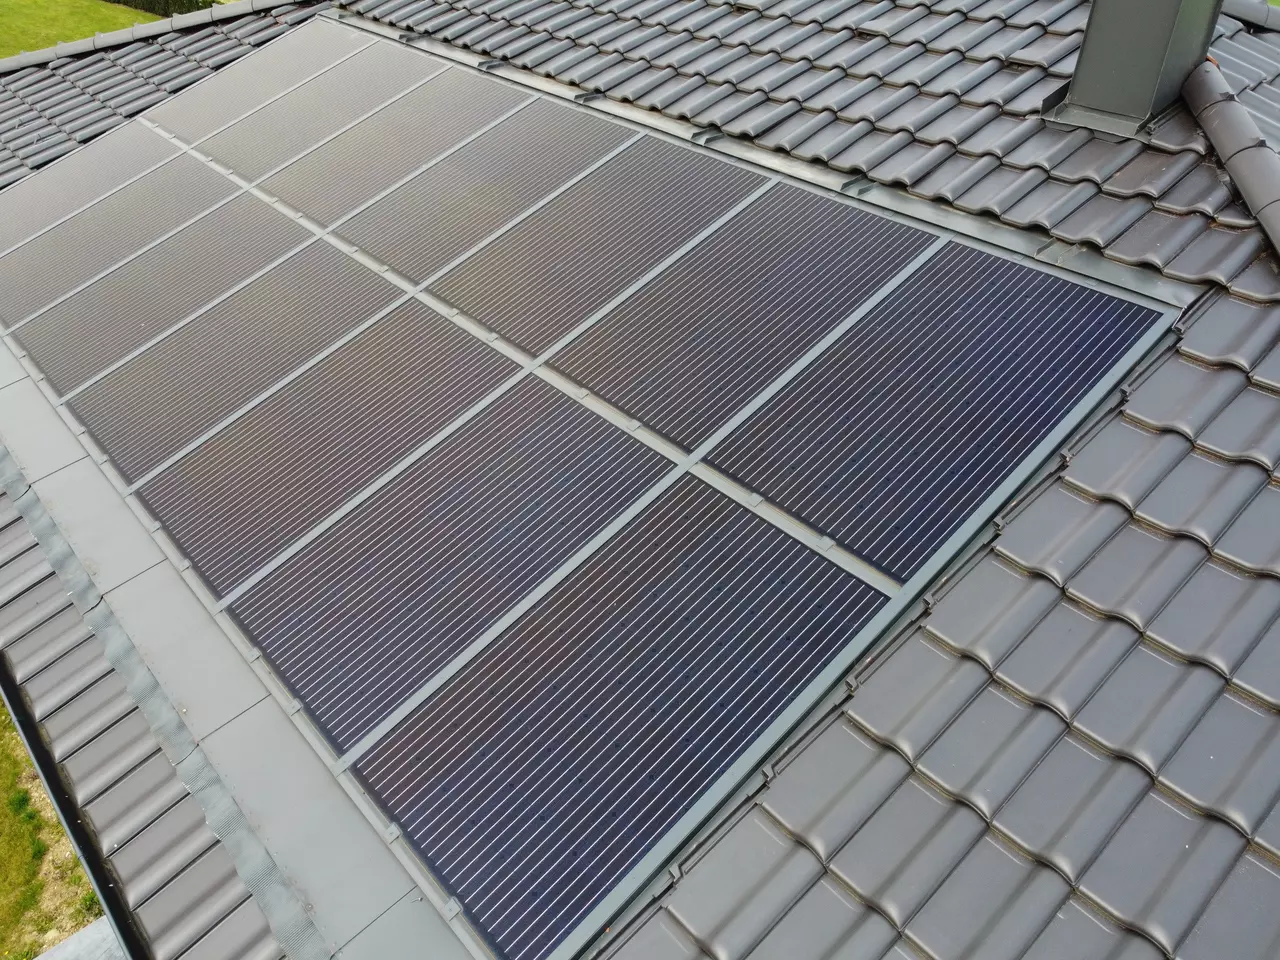 Photovoltaik am Dach